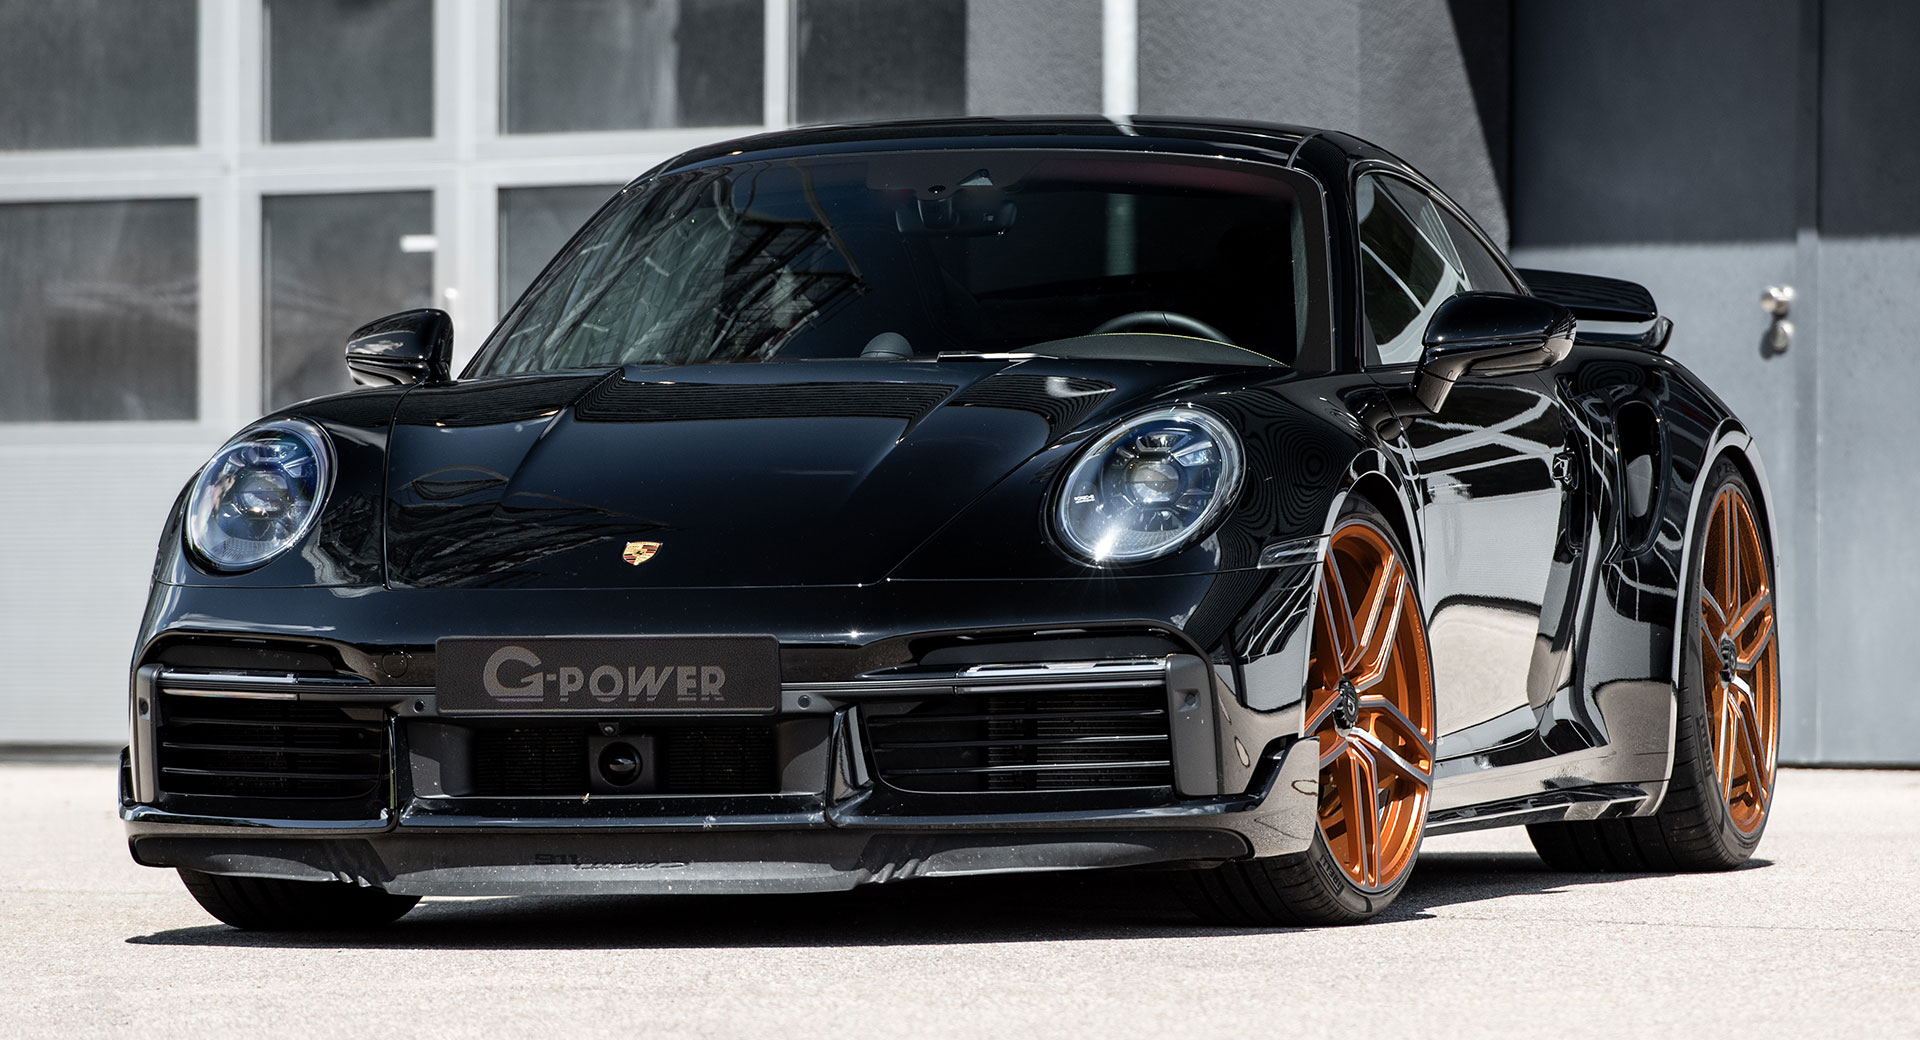 Get 800 HP And Orange Wheels With G-Power's Porsche 911 Turbo S